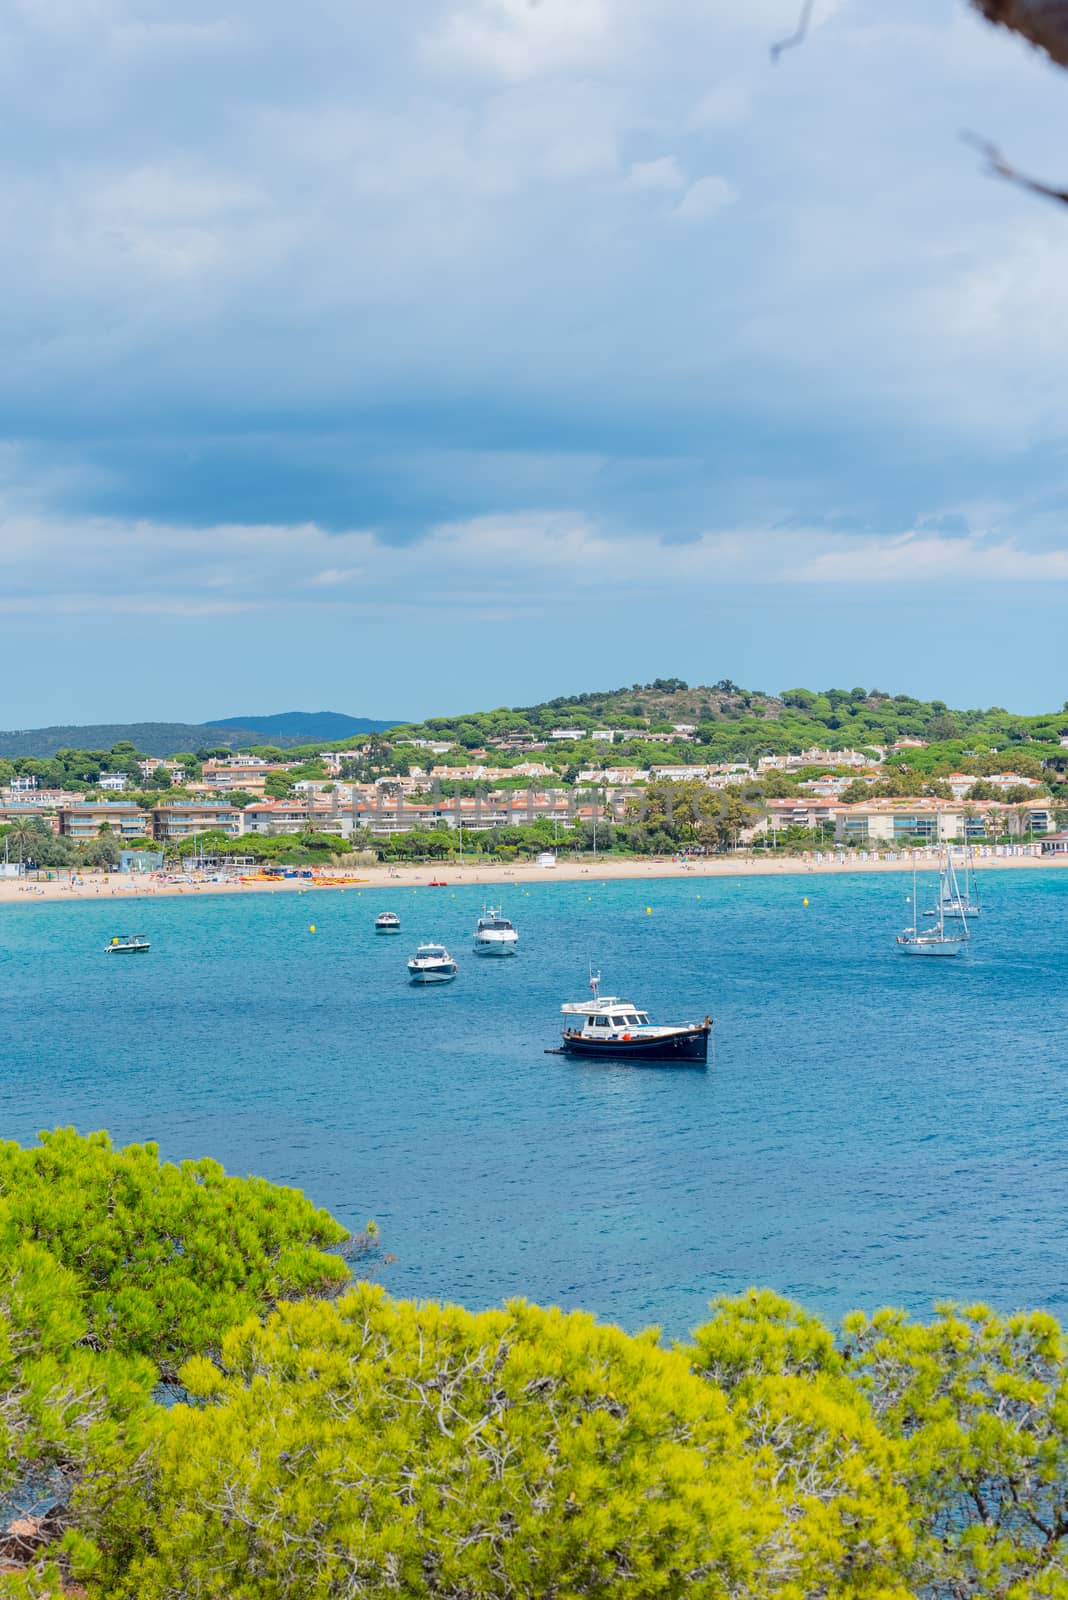 View to Sant Pol beach in the Village of Sant Feliu de Guixols a by martinscphoto